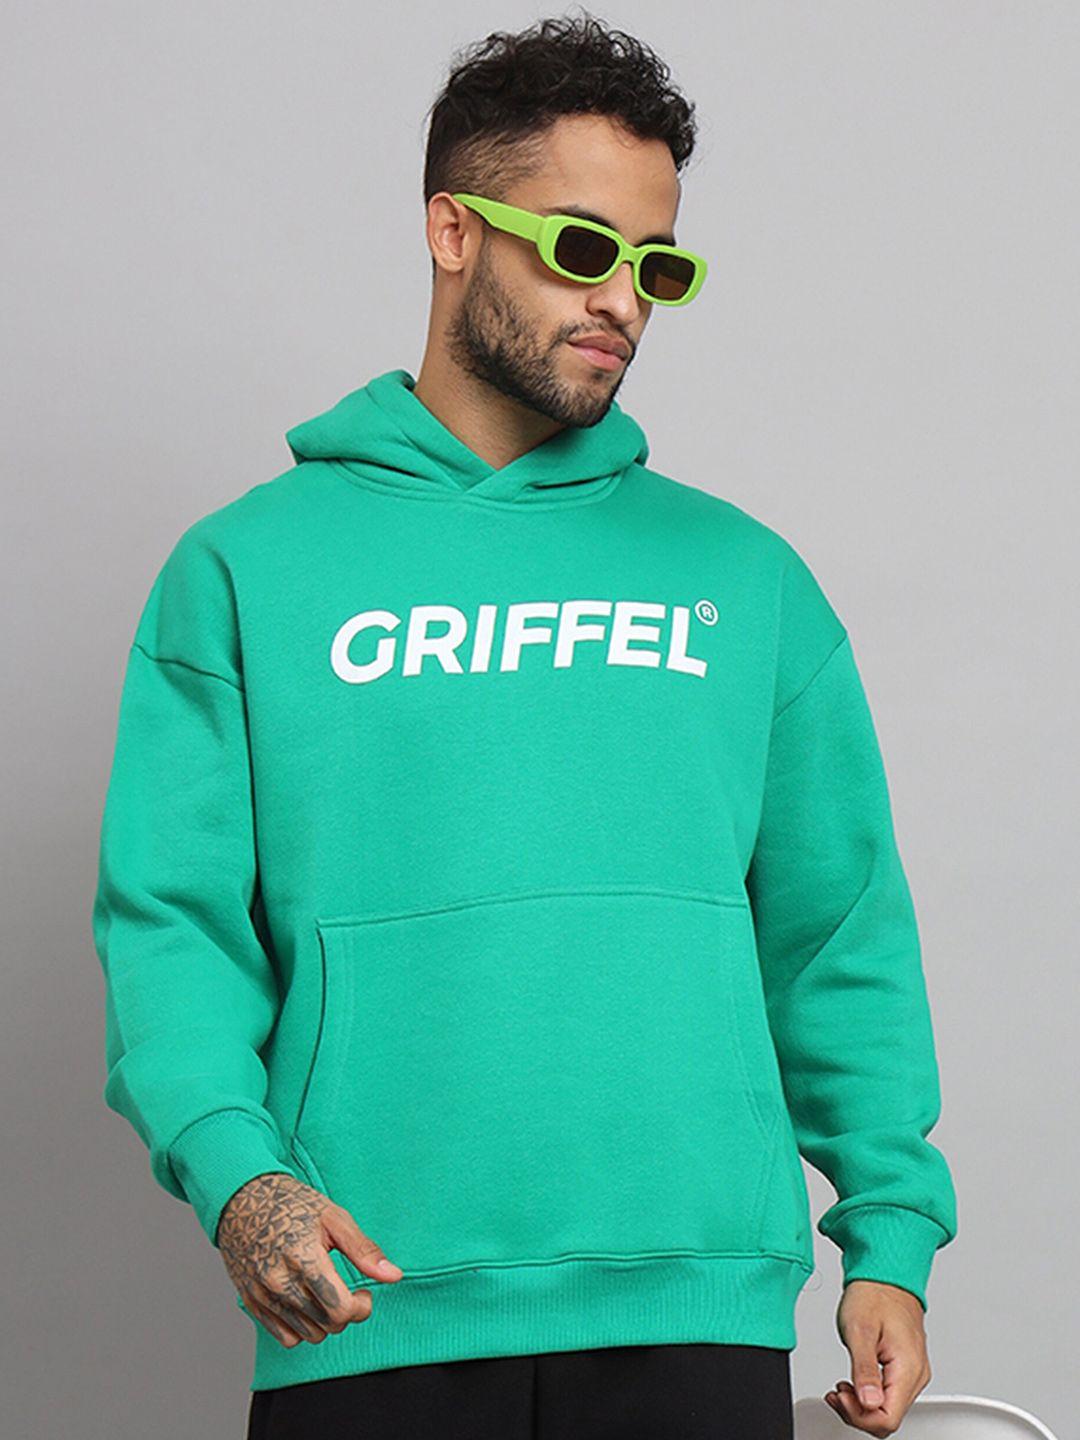 griffel typography printed fleece hooded pullover sweatshirt